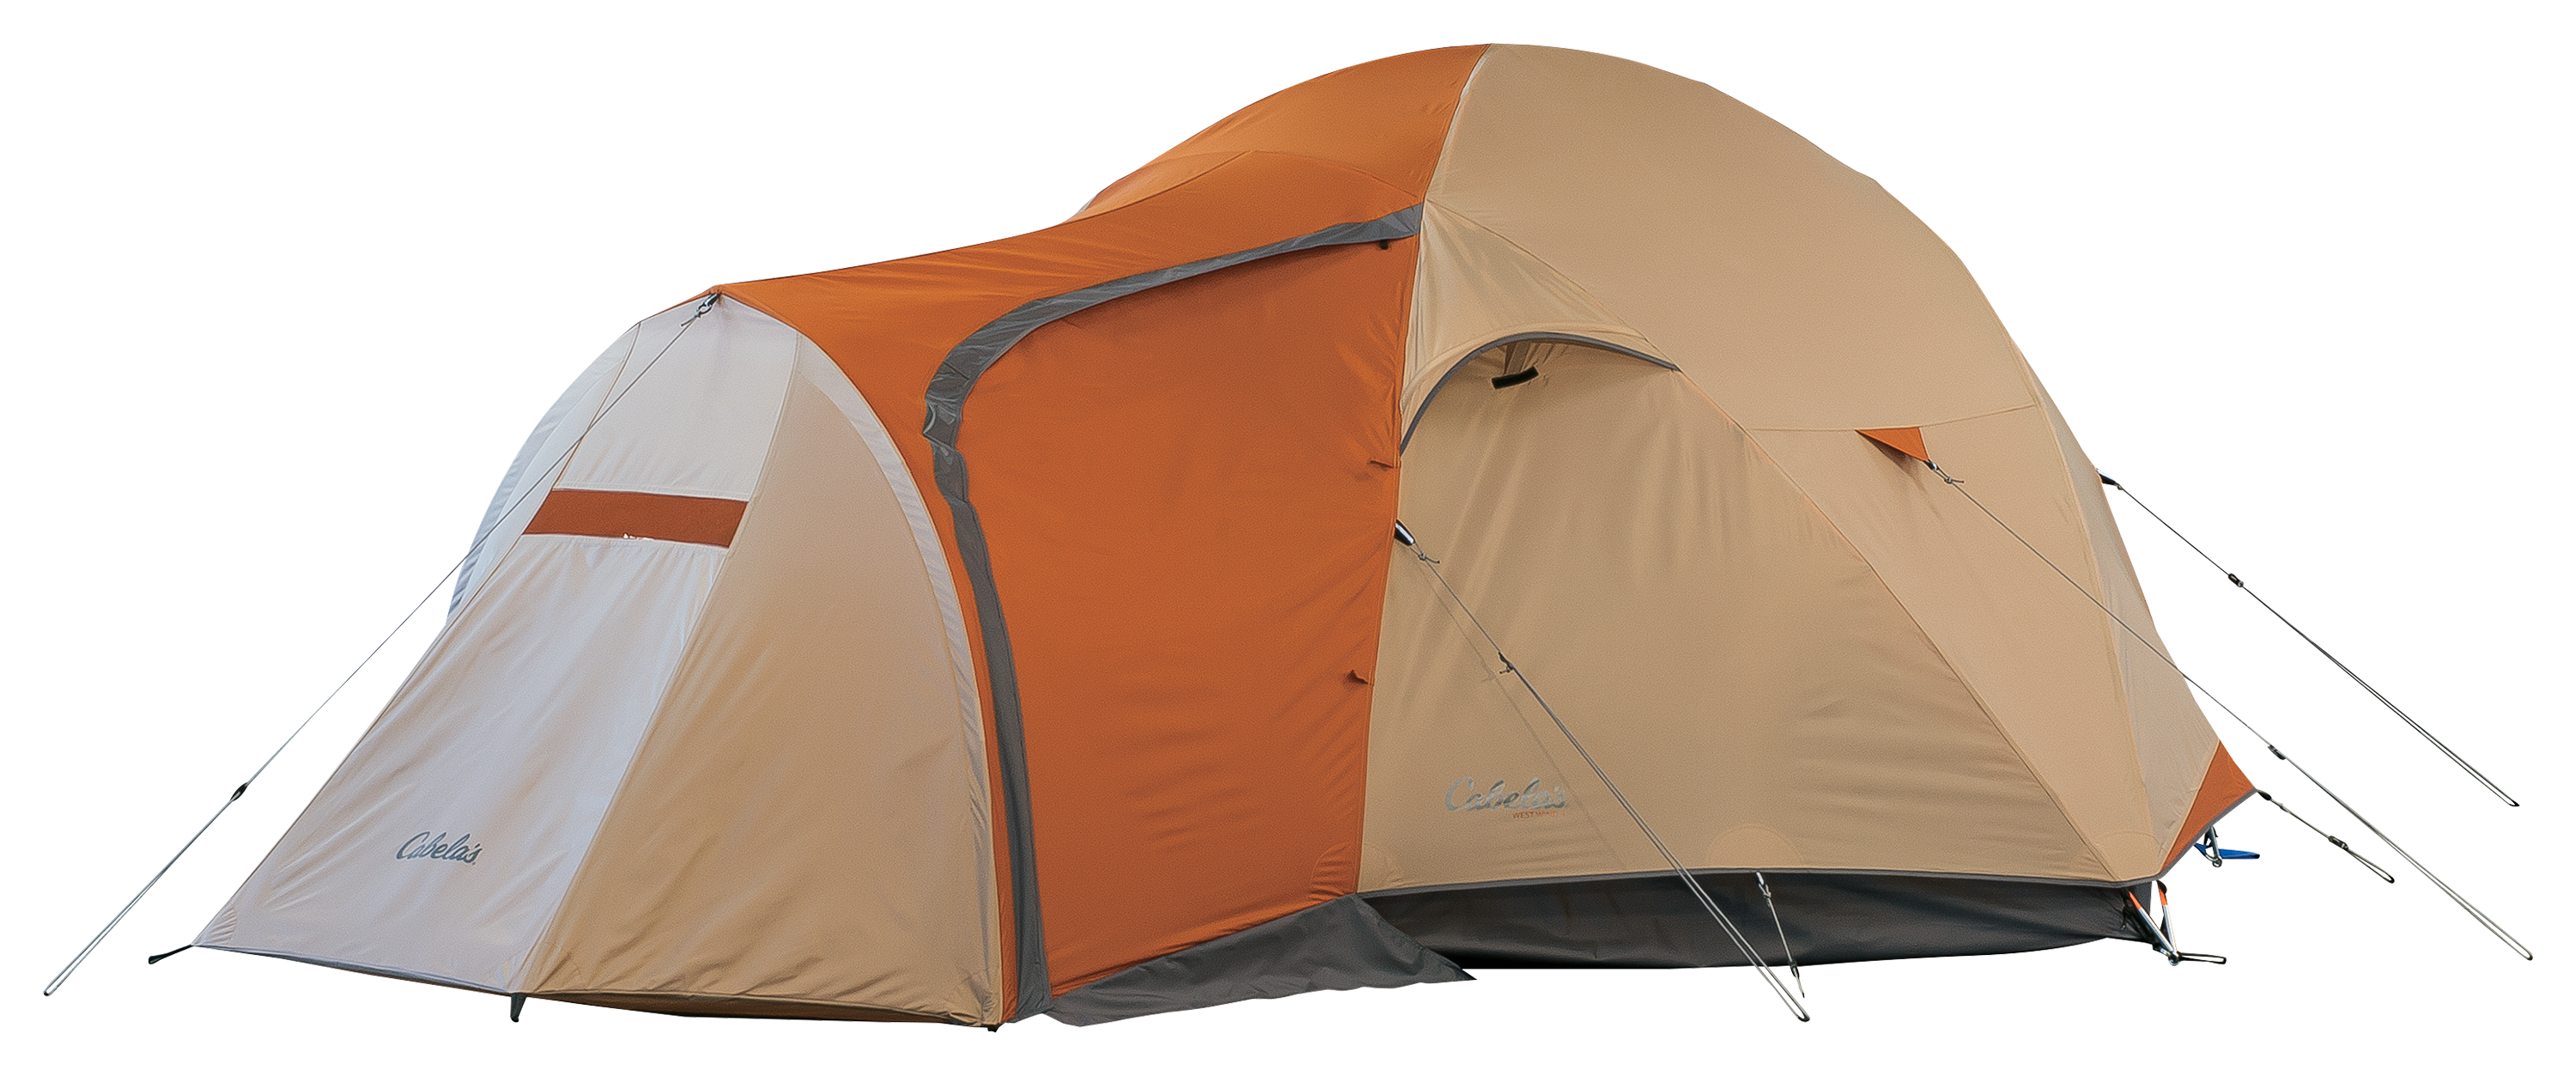 Cabelas West Wind 6-Person Dome Tent